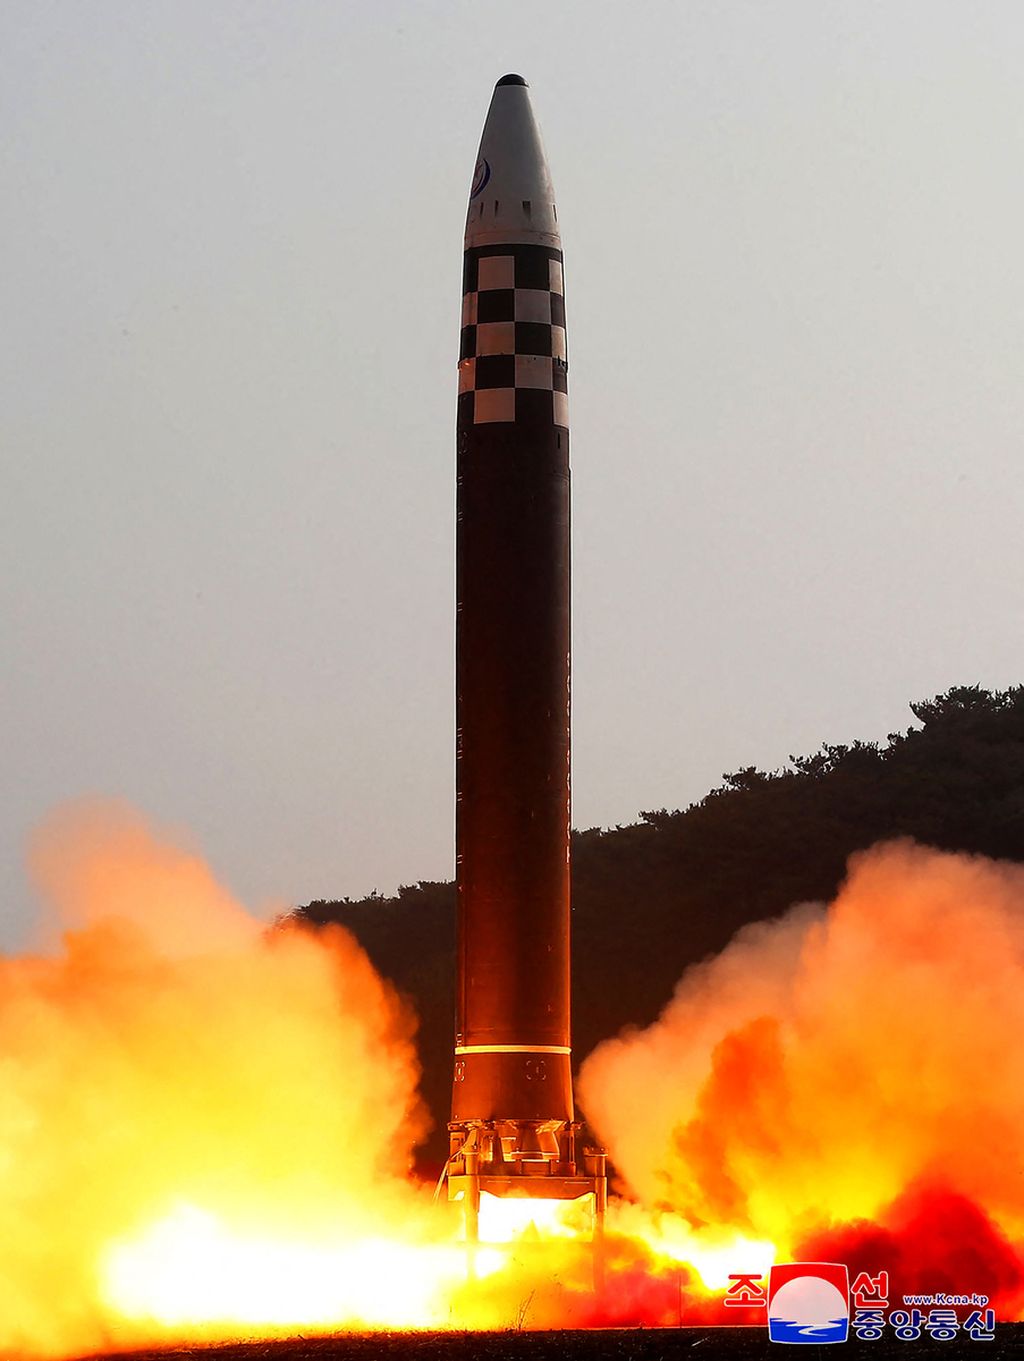 Foto yang diambil pada 24 Maret 2022 dan dirilis oleh kantor berita KCNA pada 25 Maret 2022 menunjukkan peluncuran tipe baru rudal balistik antarbenua, Hwasong-17, di lokasi yang dirahasiakan di Korea Utara.